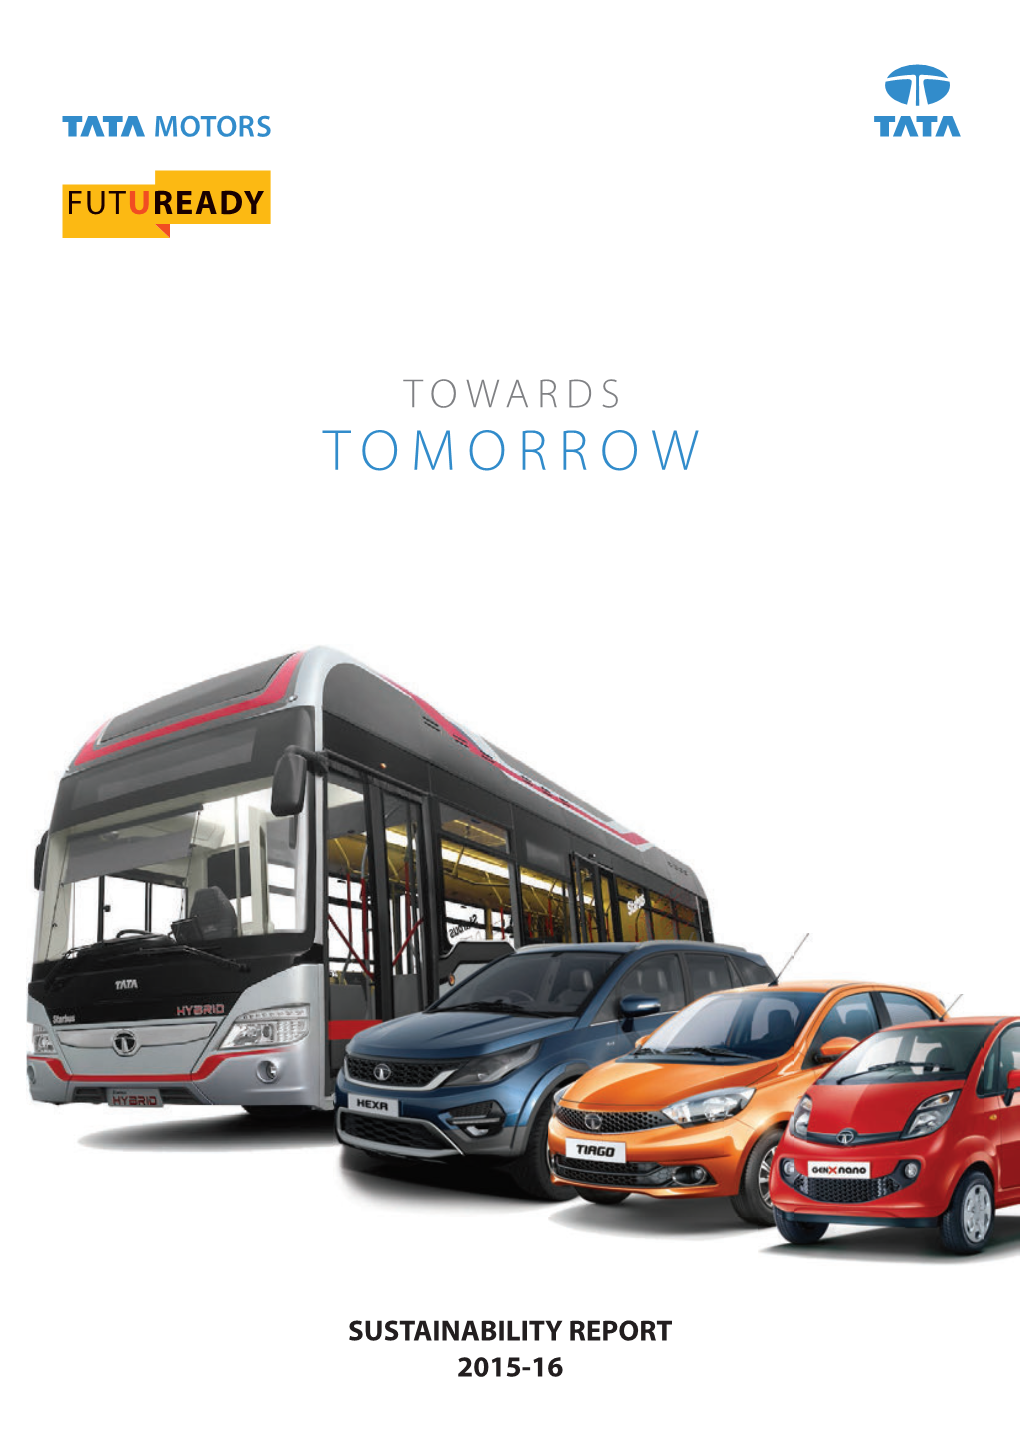 Tata Motors Sustainability Report 2015-16 15 Oct.Cdr